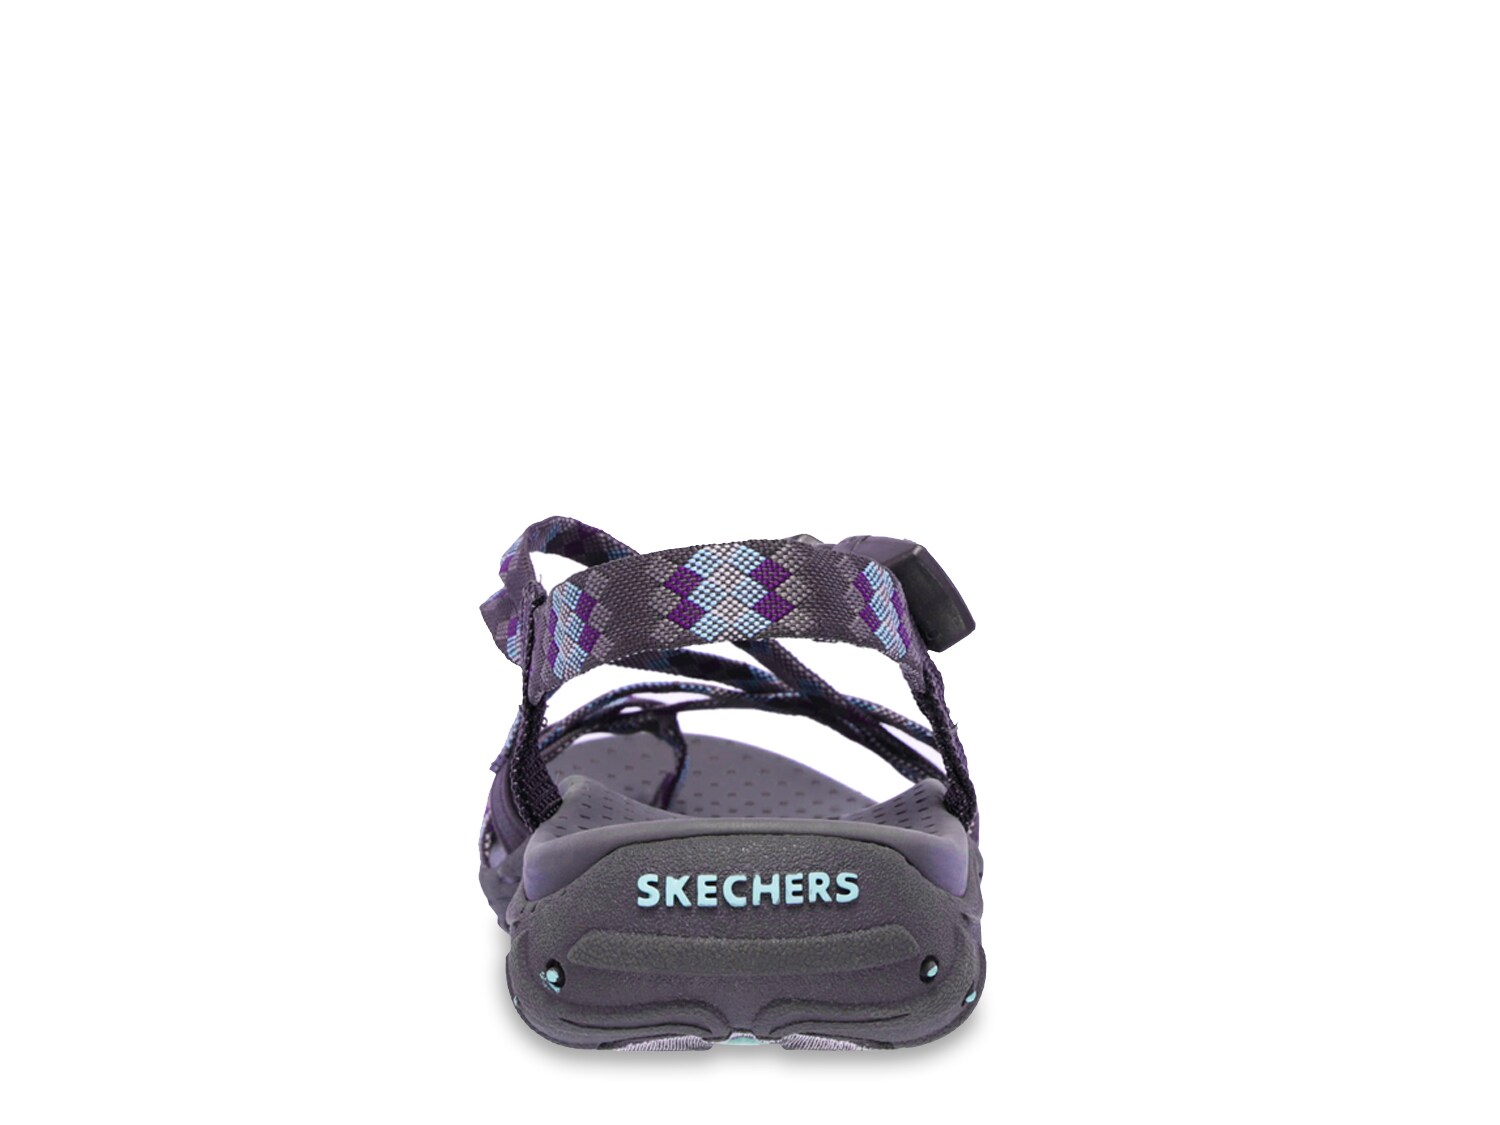 skechers reggae jamrock women's sandals